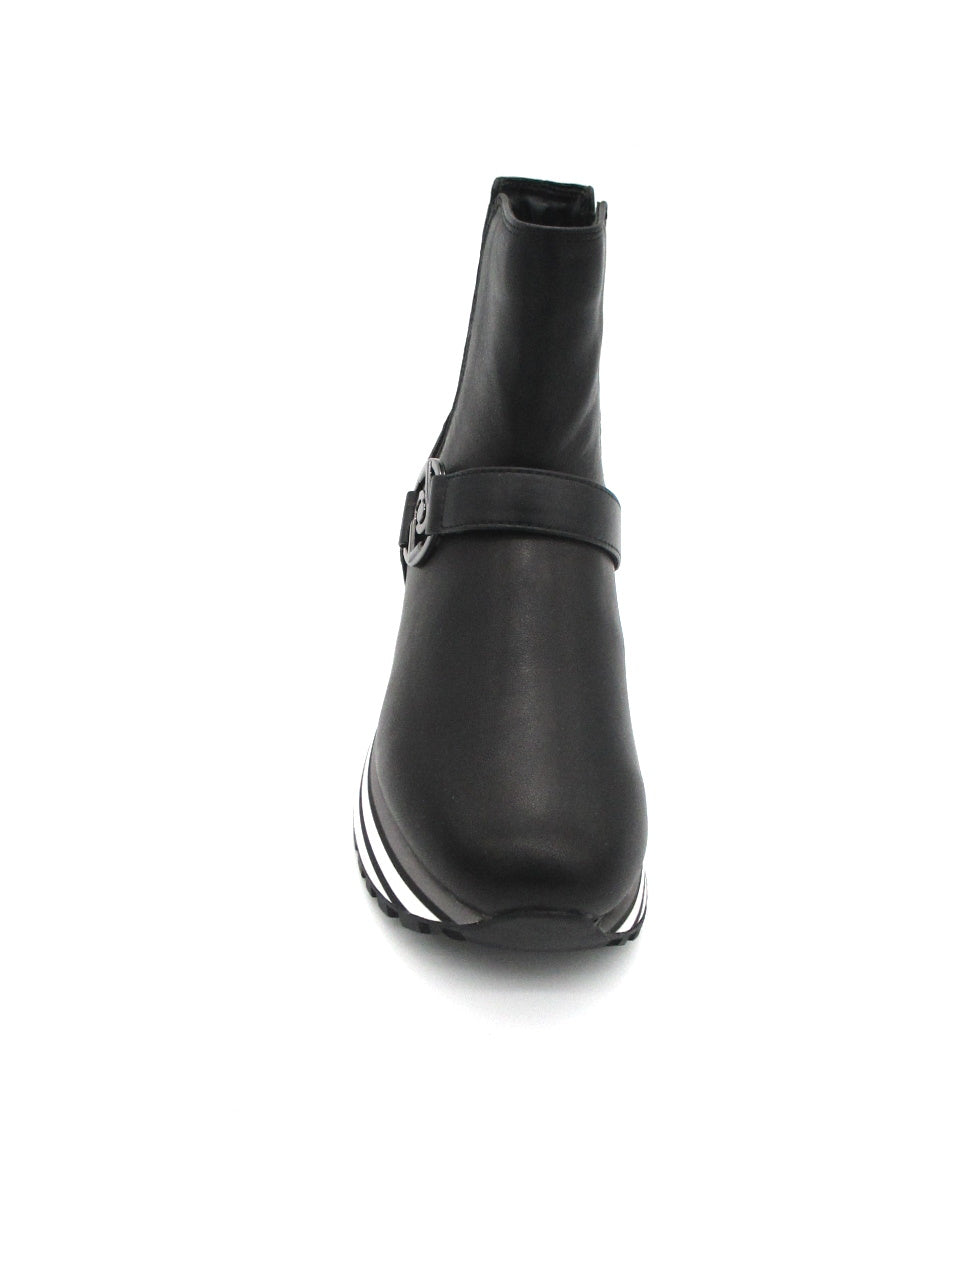 LIU JO Maxi Wonder 49 Calf Black leather ankle boot